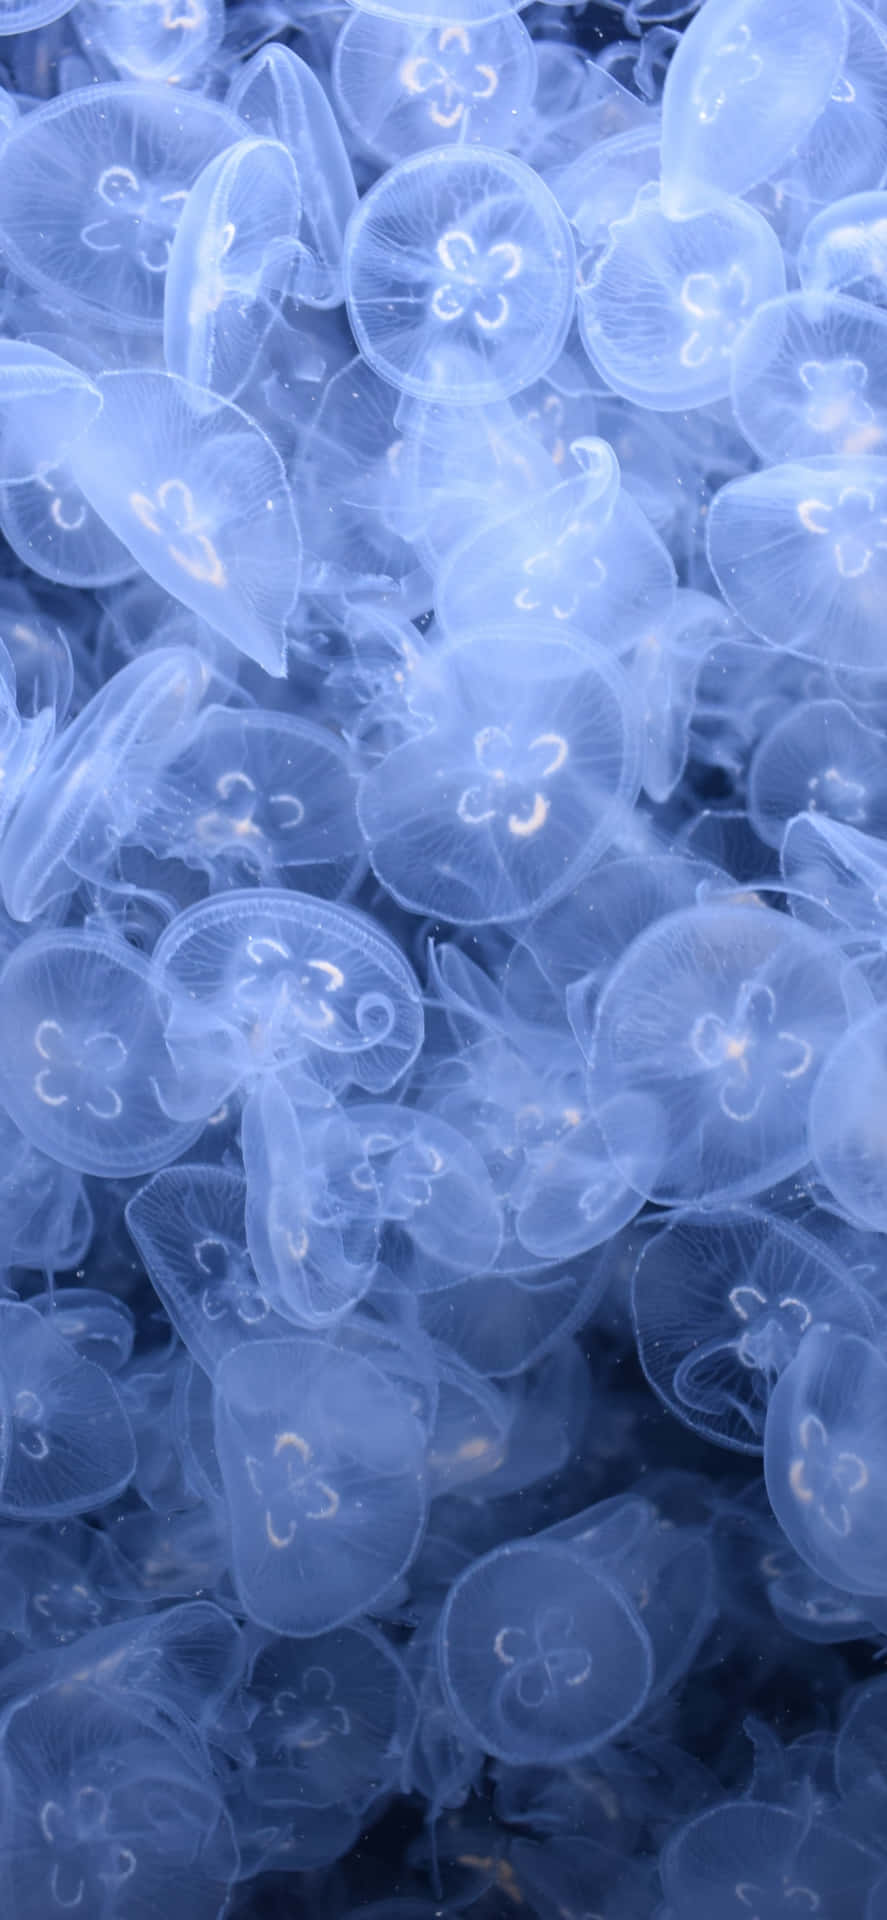 Moonlit_ Jellyfish_ Swarm.jpg Wallpaper